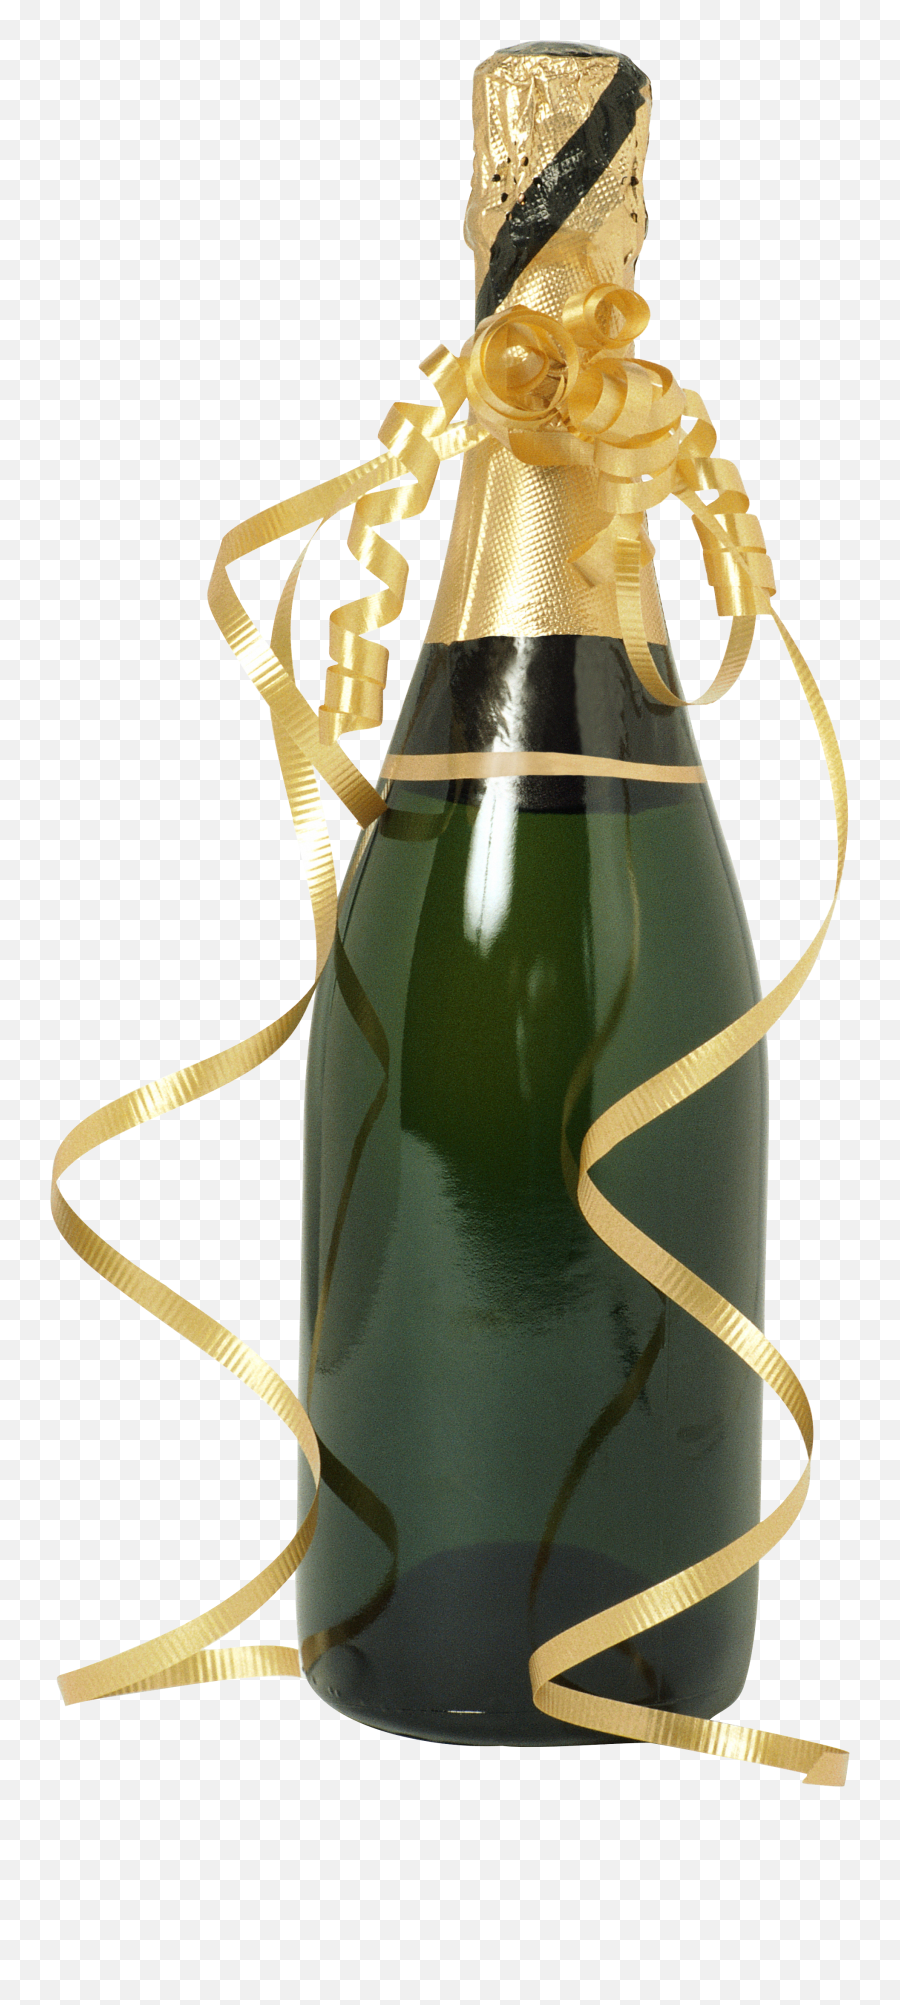 Champagne Bottle Png Image